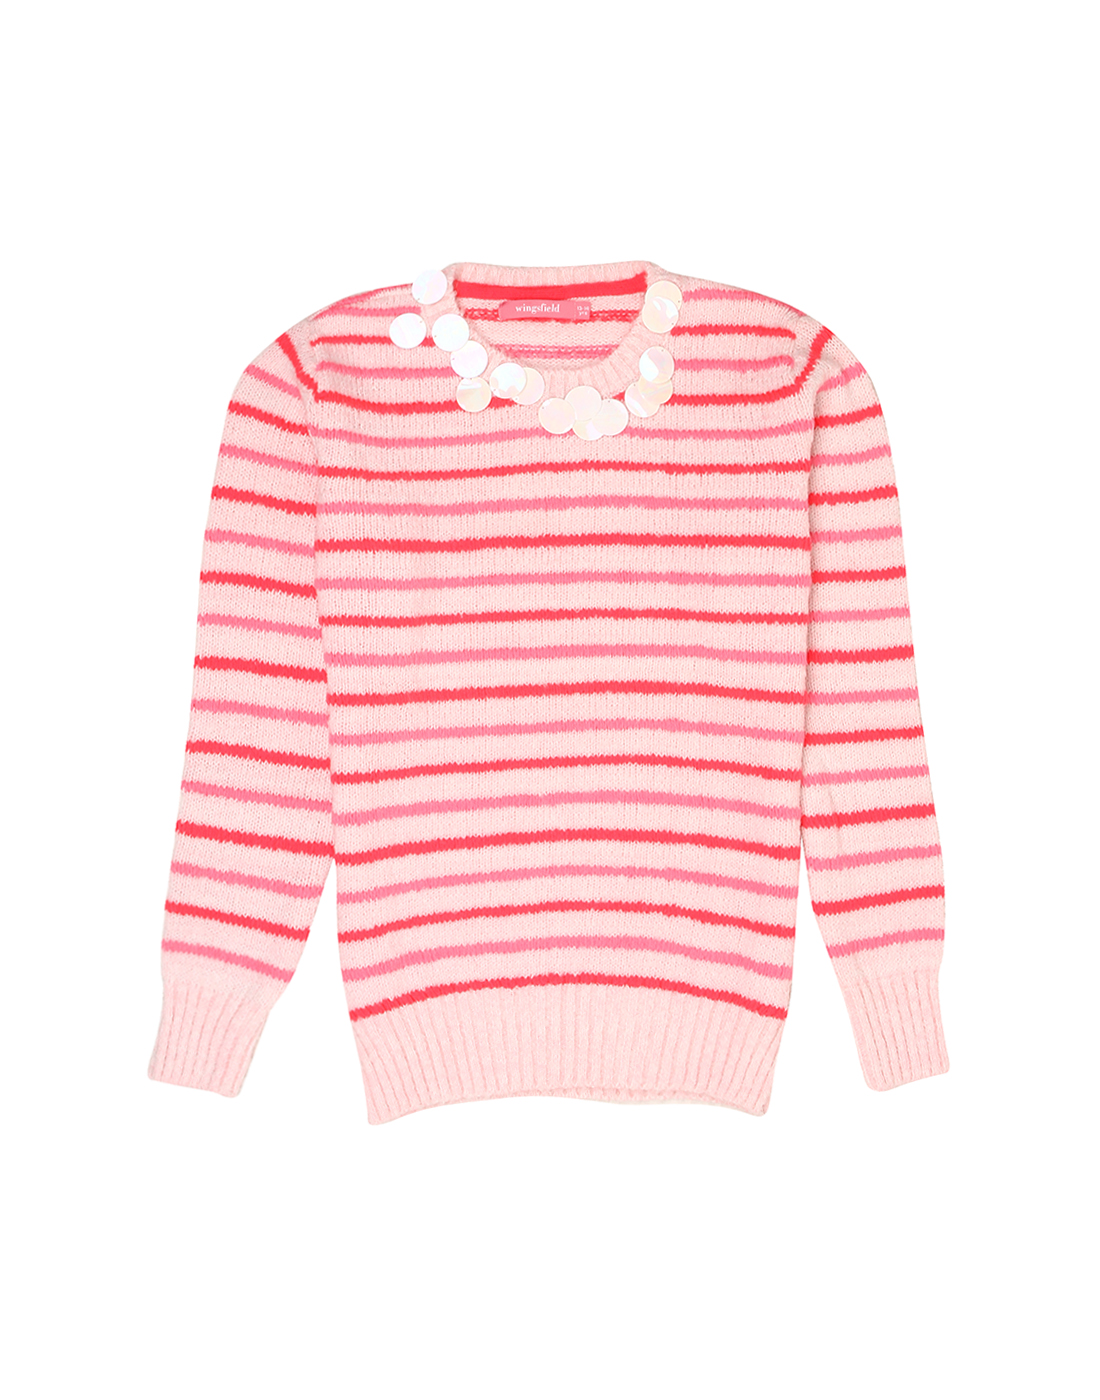 Wingsfield Girls Pink Embellished Sweater